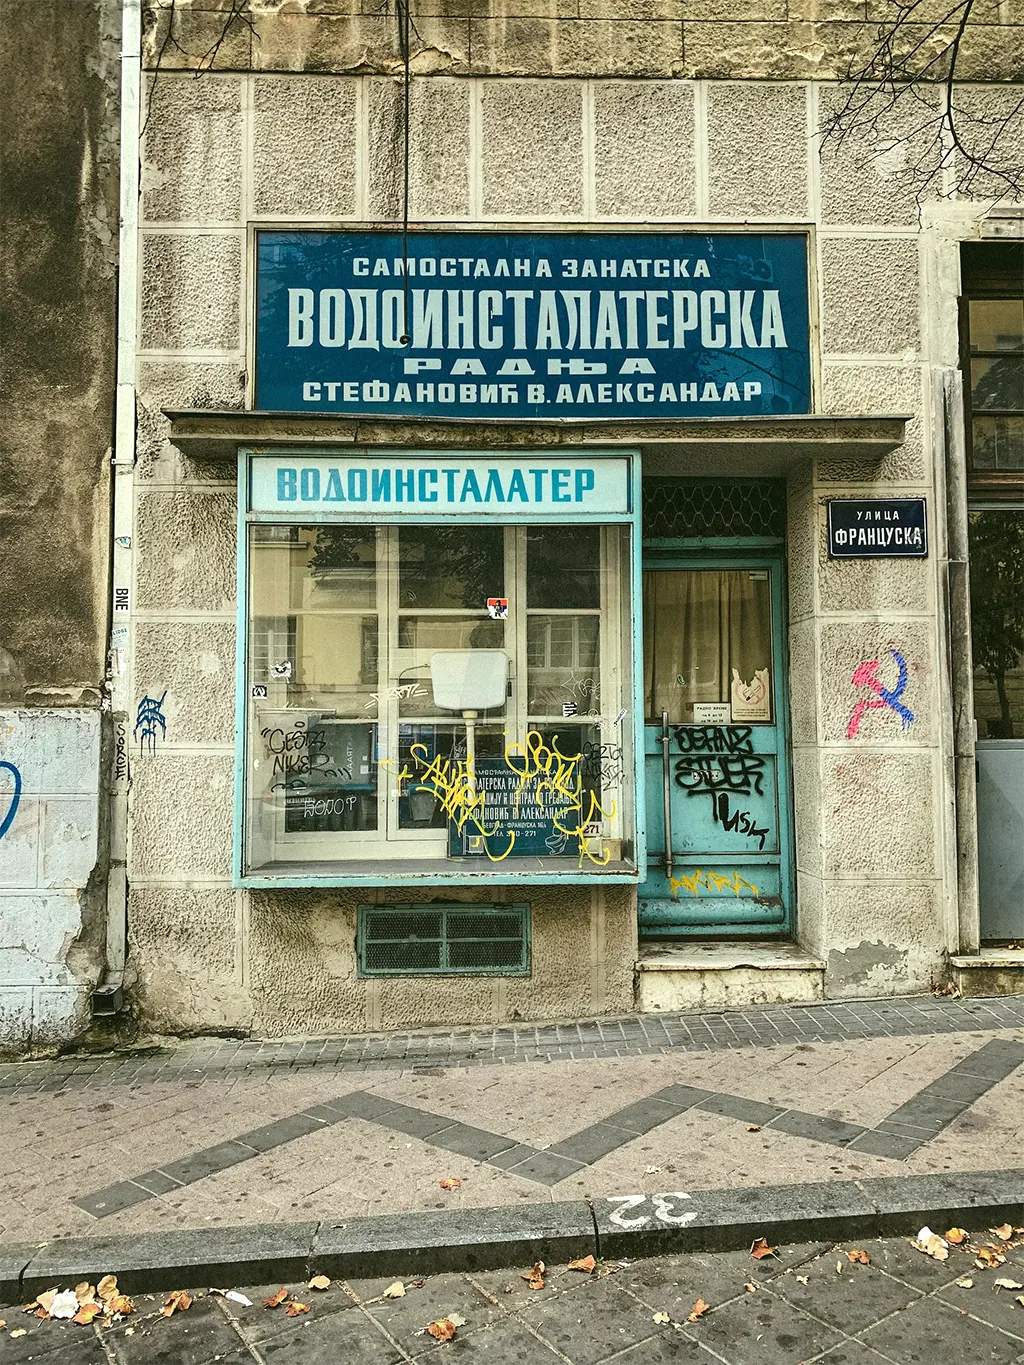 Belgrado, la capital de Serbia